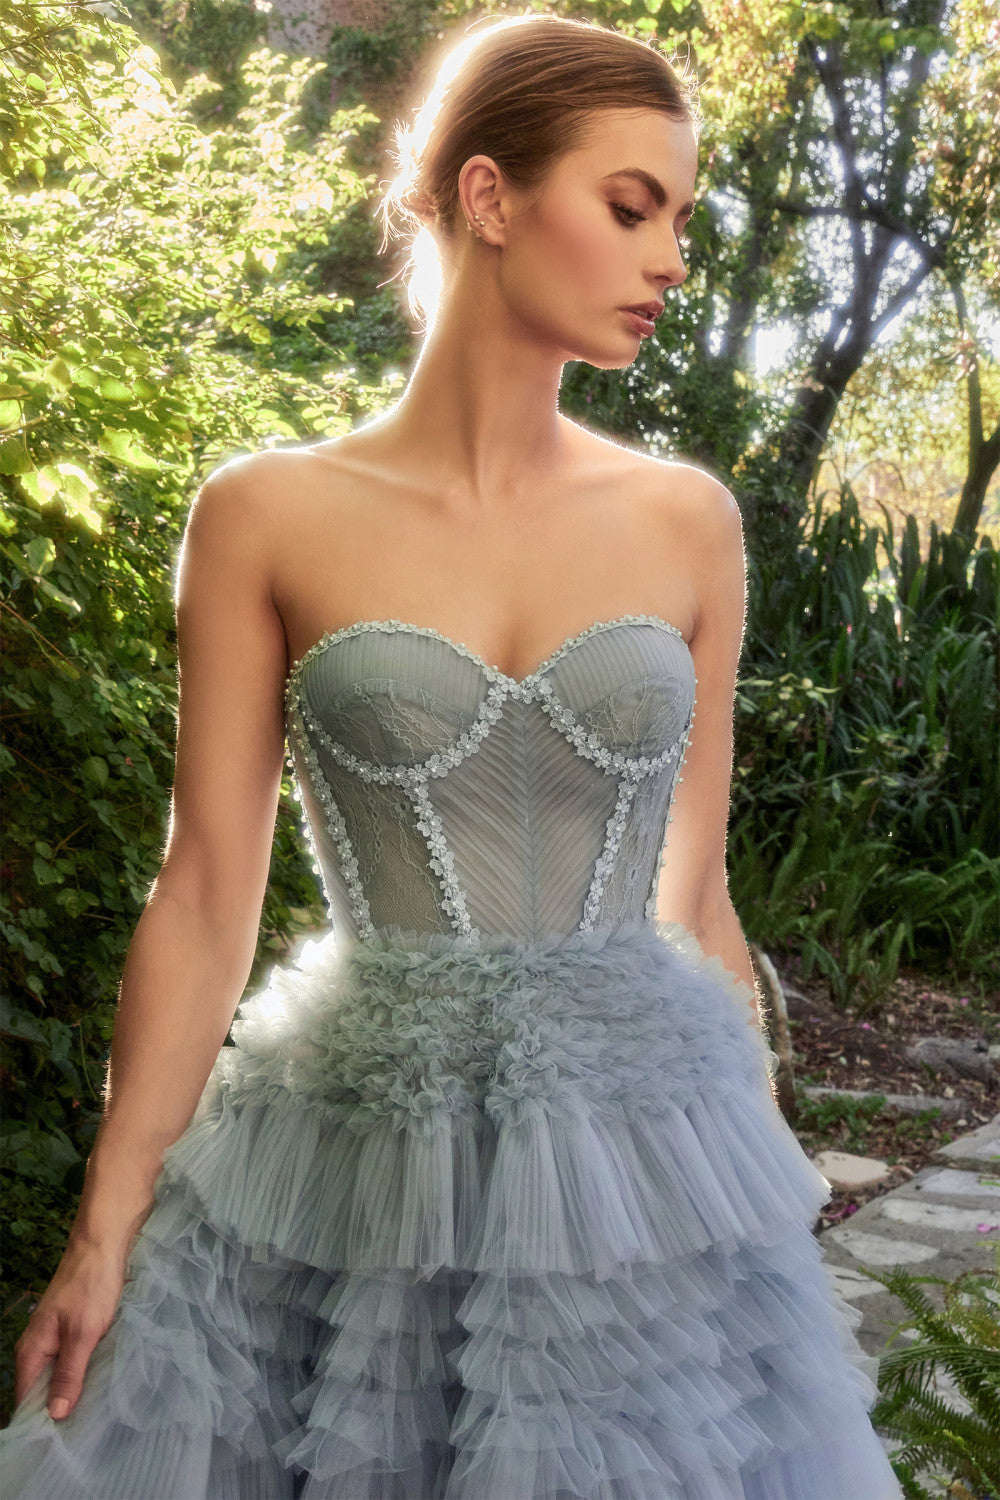 Lala Strapless Corset Ruffle Ballgown Prom Dress 6201017IRR-ParisBlue